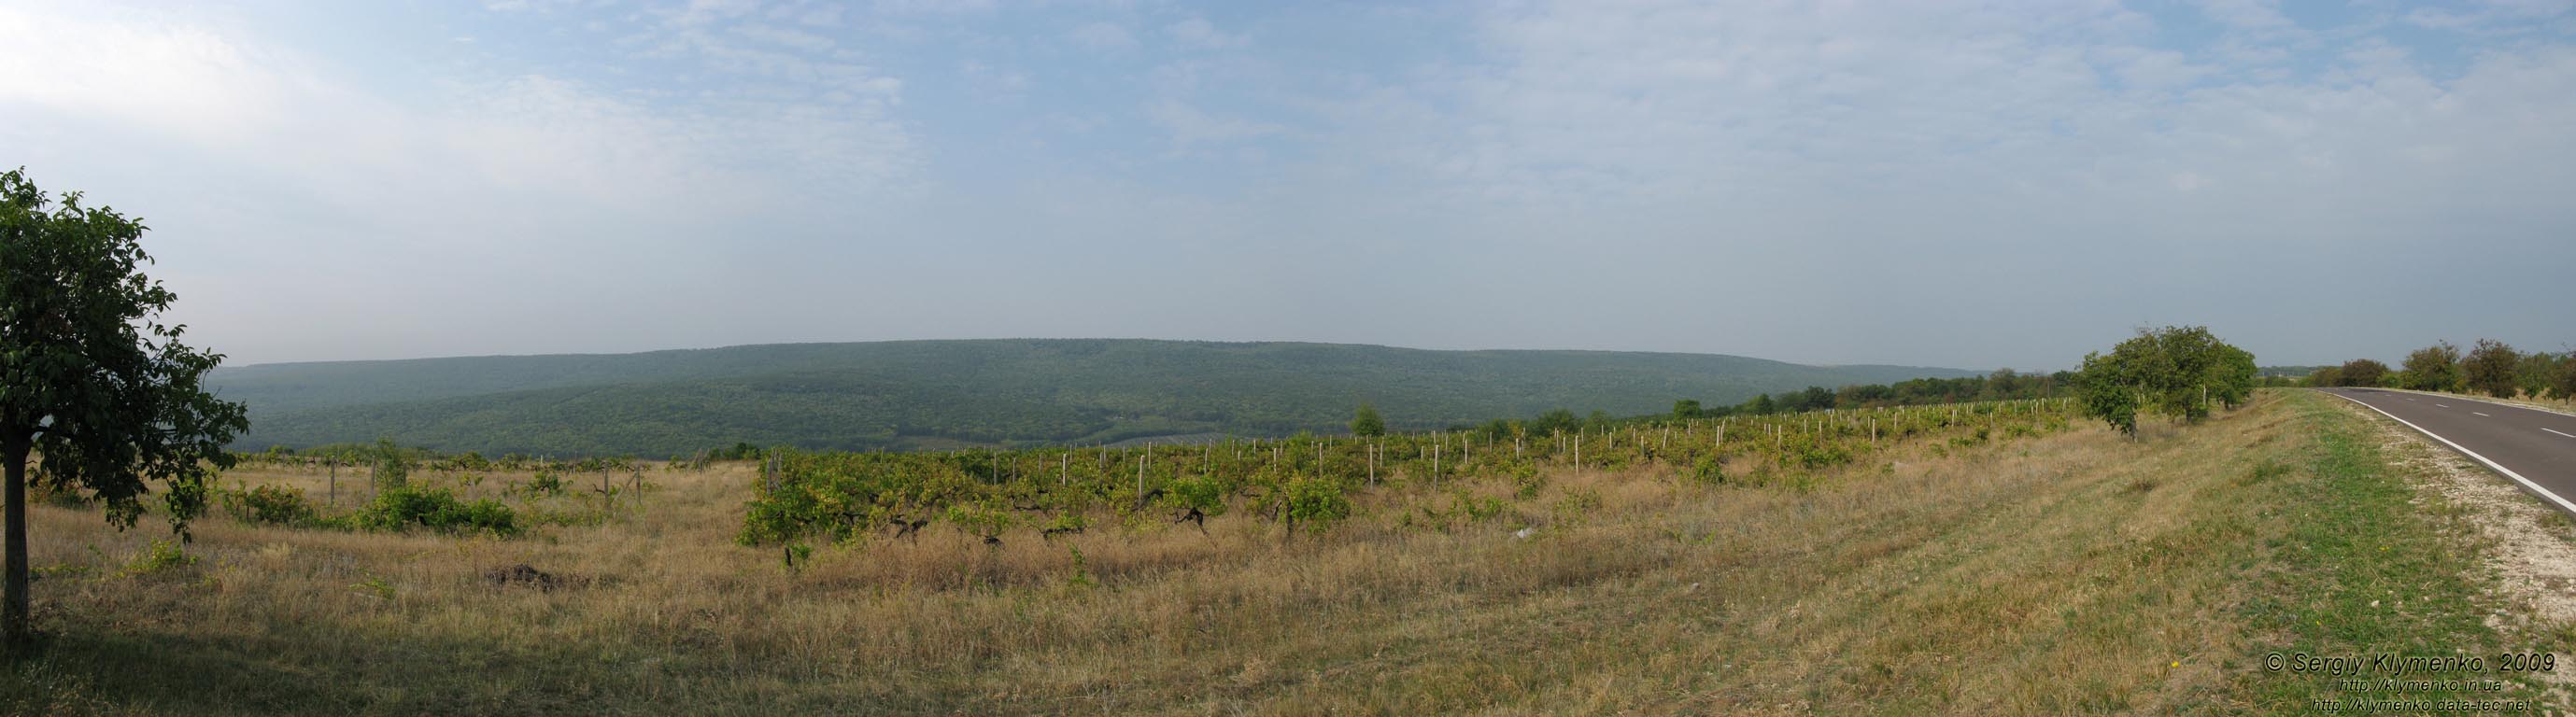 Молдавия. Фото. Пейзаж возле гостинично-ресторанного комплекса «Stejaris», вид с автодороги E581. Панорама ~120°.